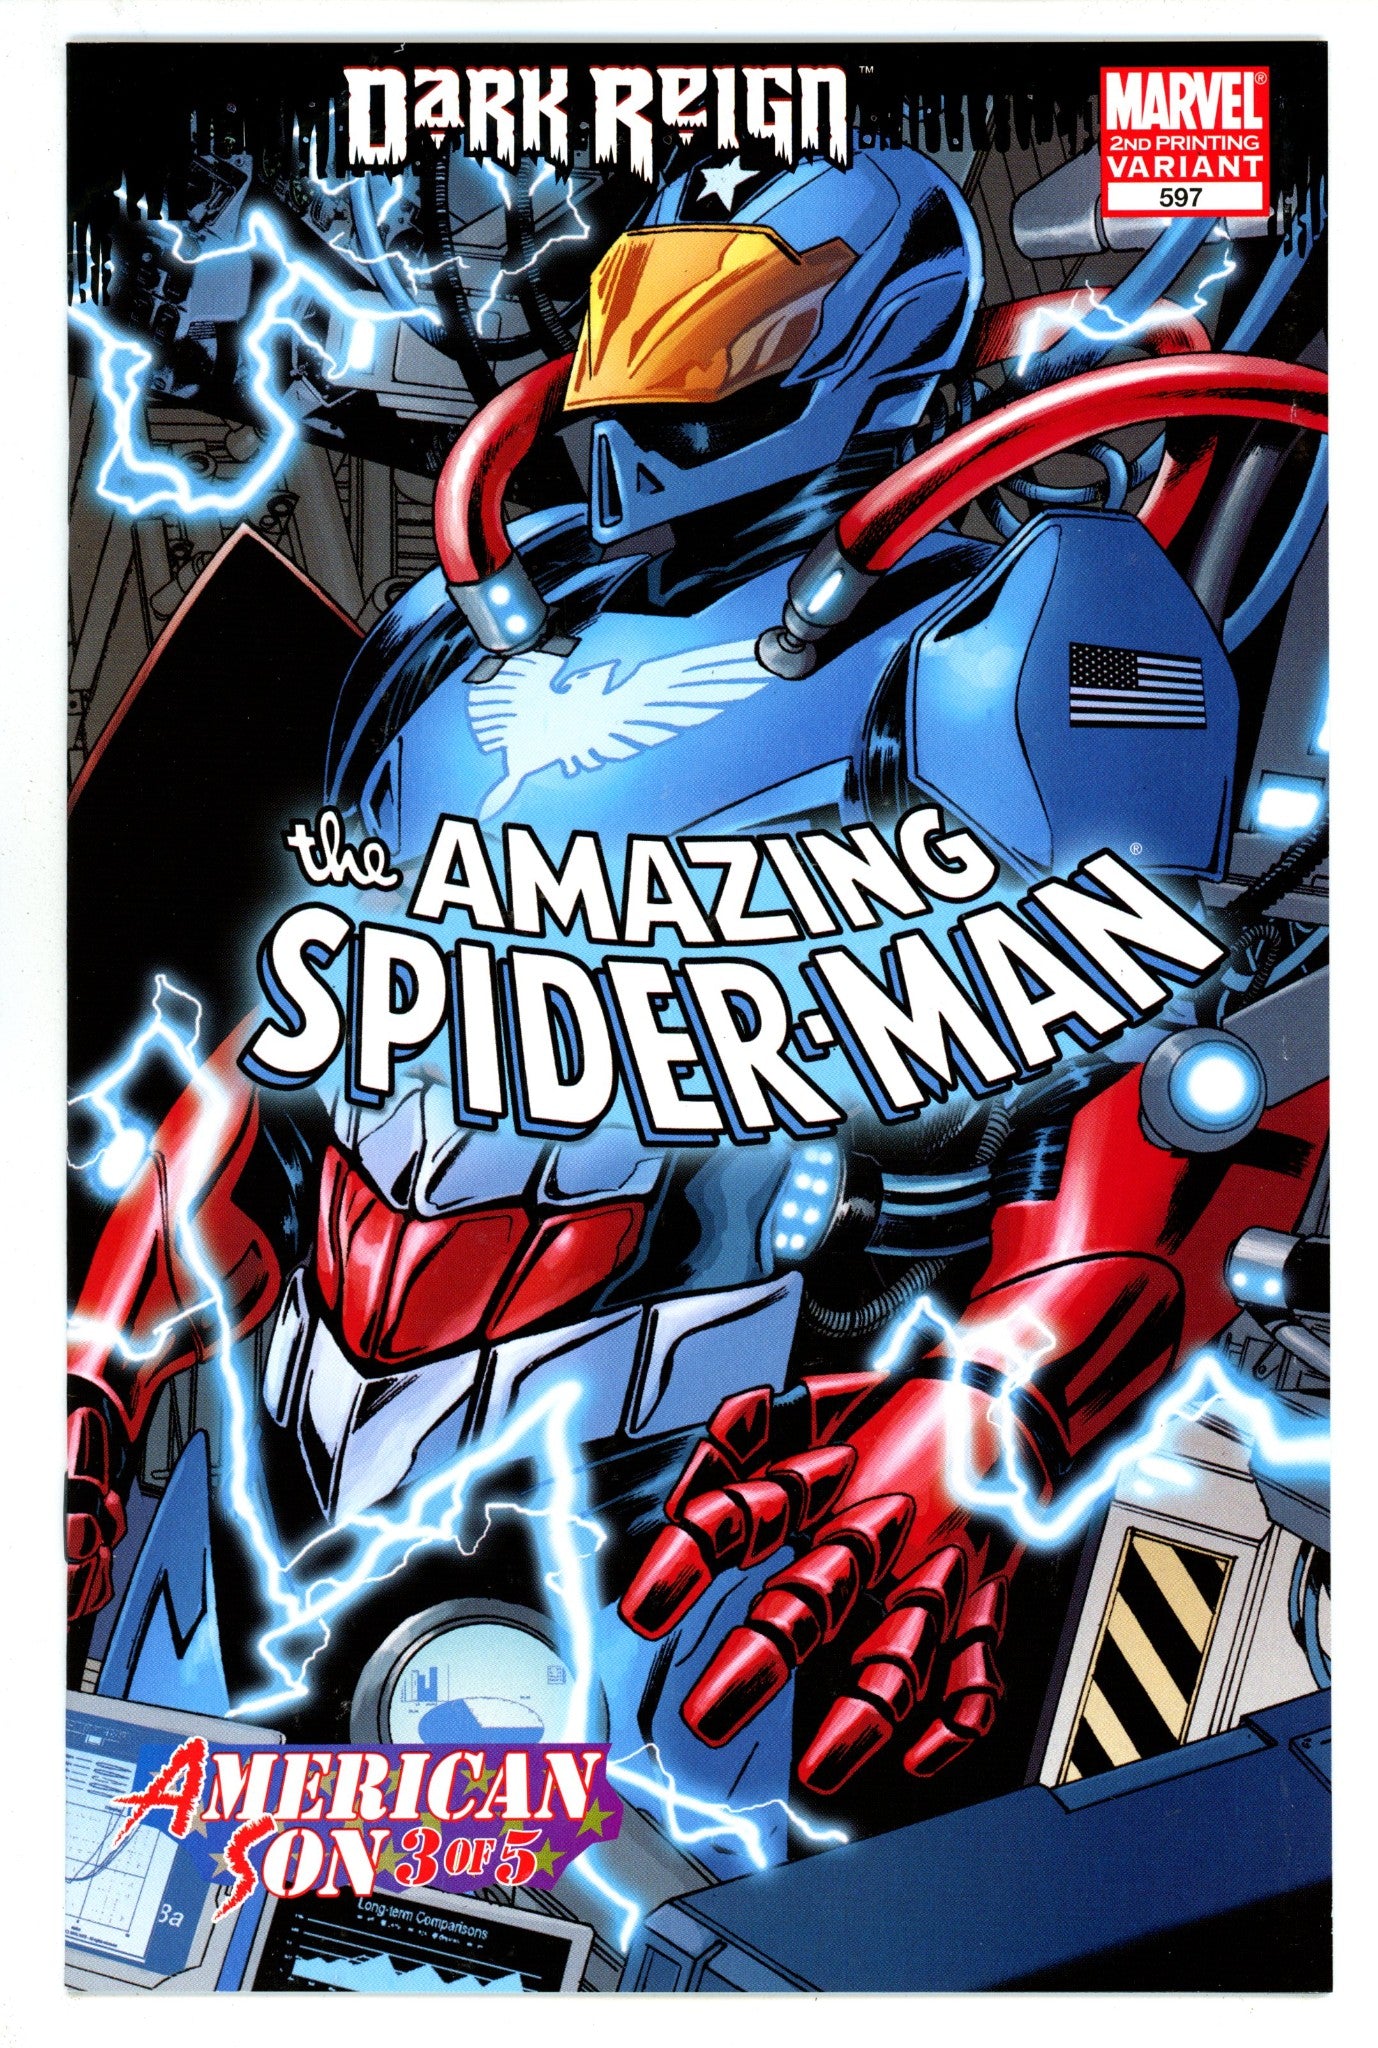 The Amazing Spider-Man Vol 2 597 VF+ (8.5) (2009) 2nd Print 